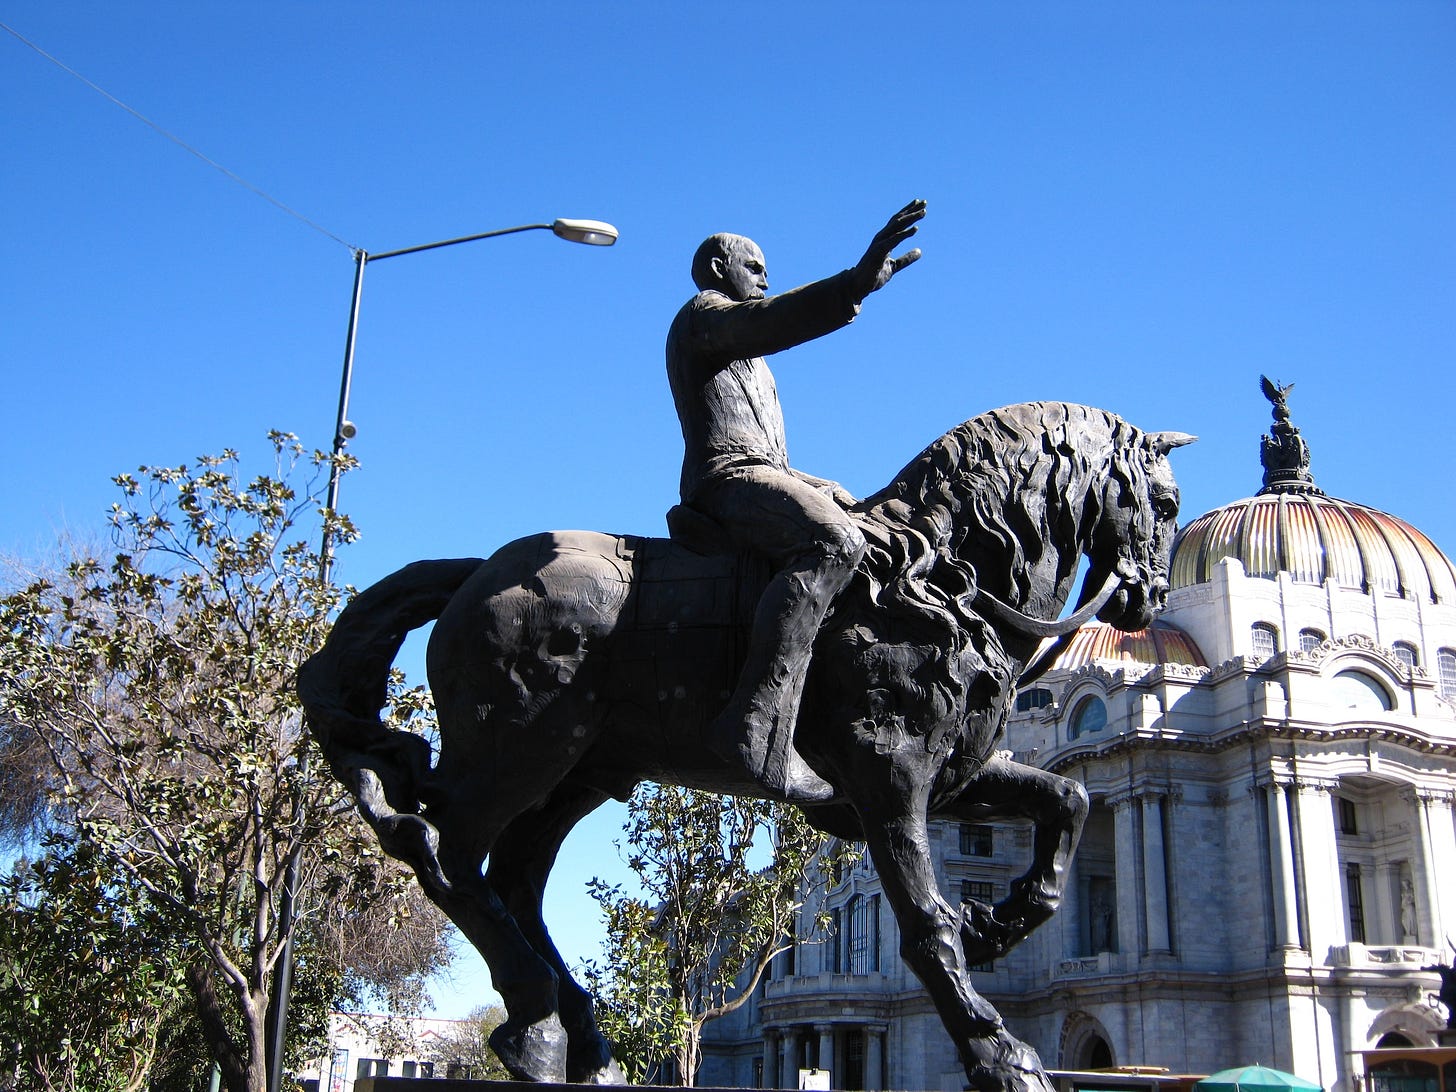 Statue of Francisco Madero on horseback